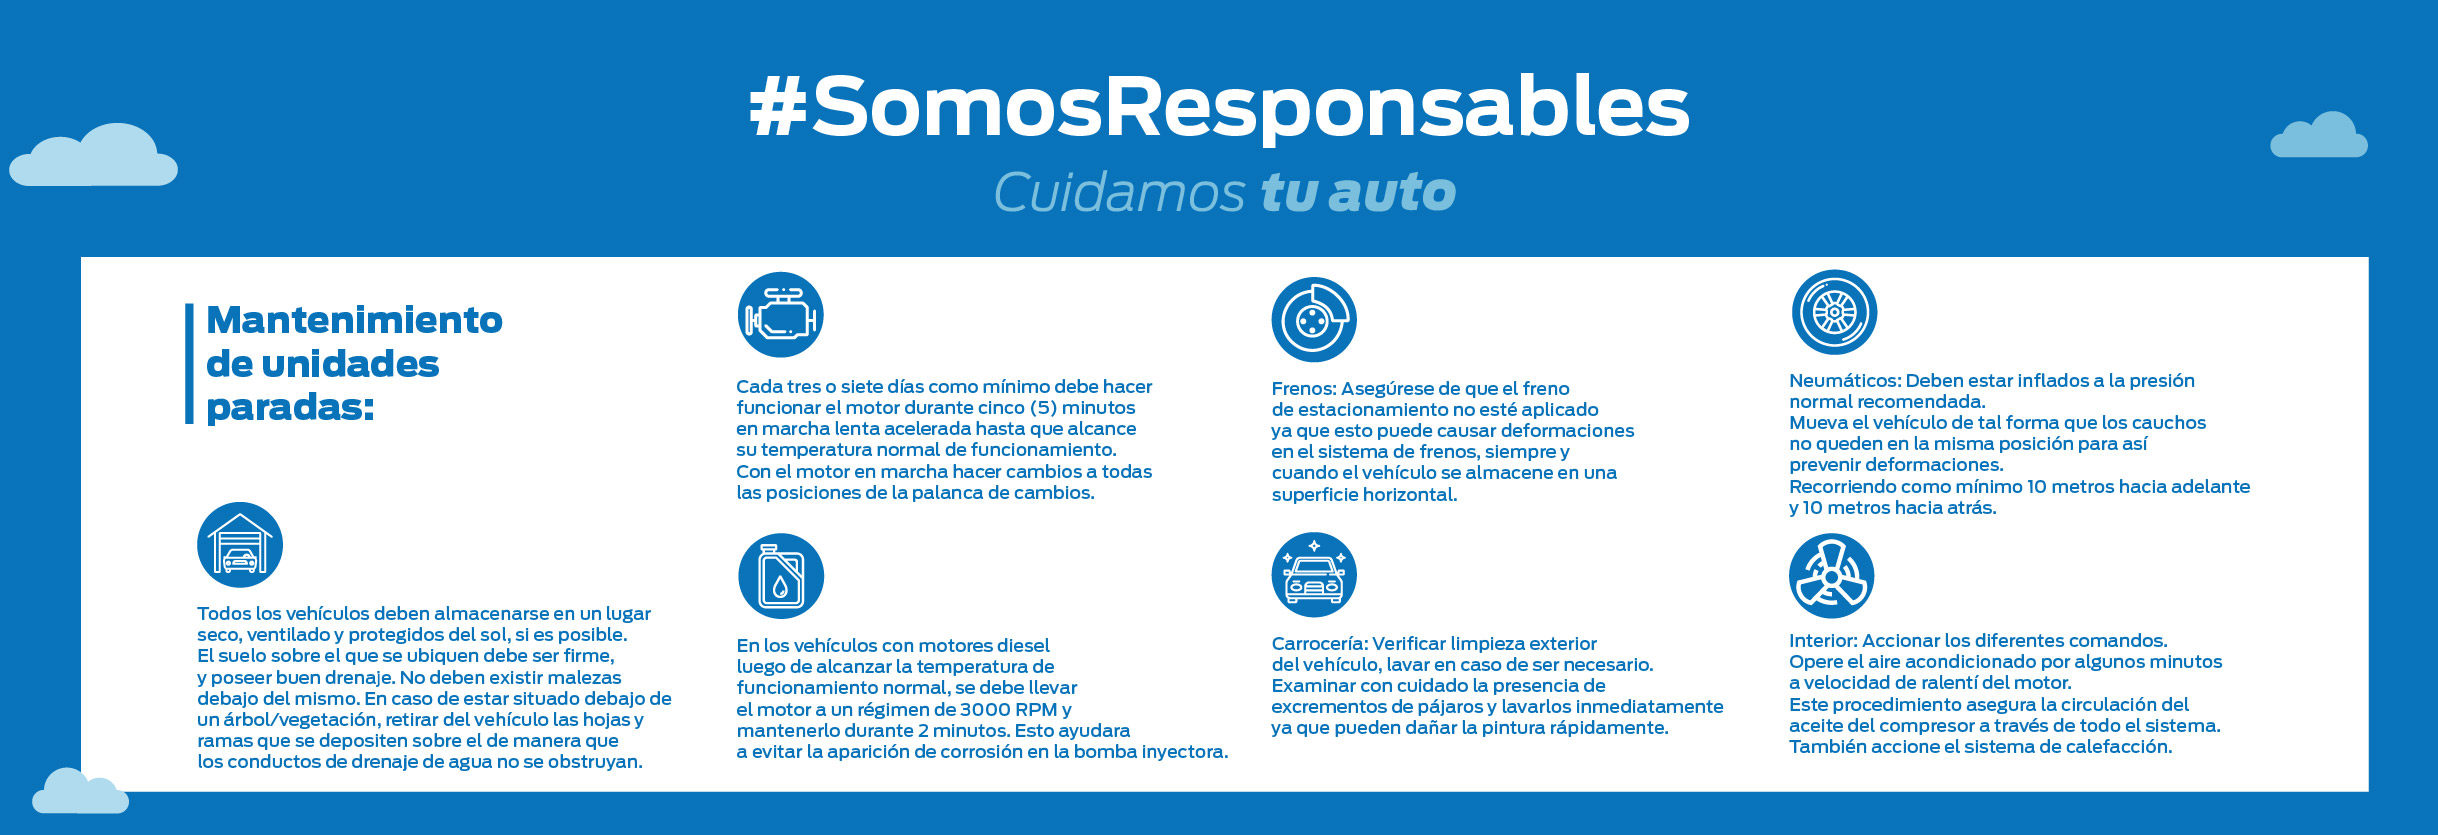 #SomosResponsables Guspamar